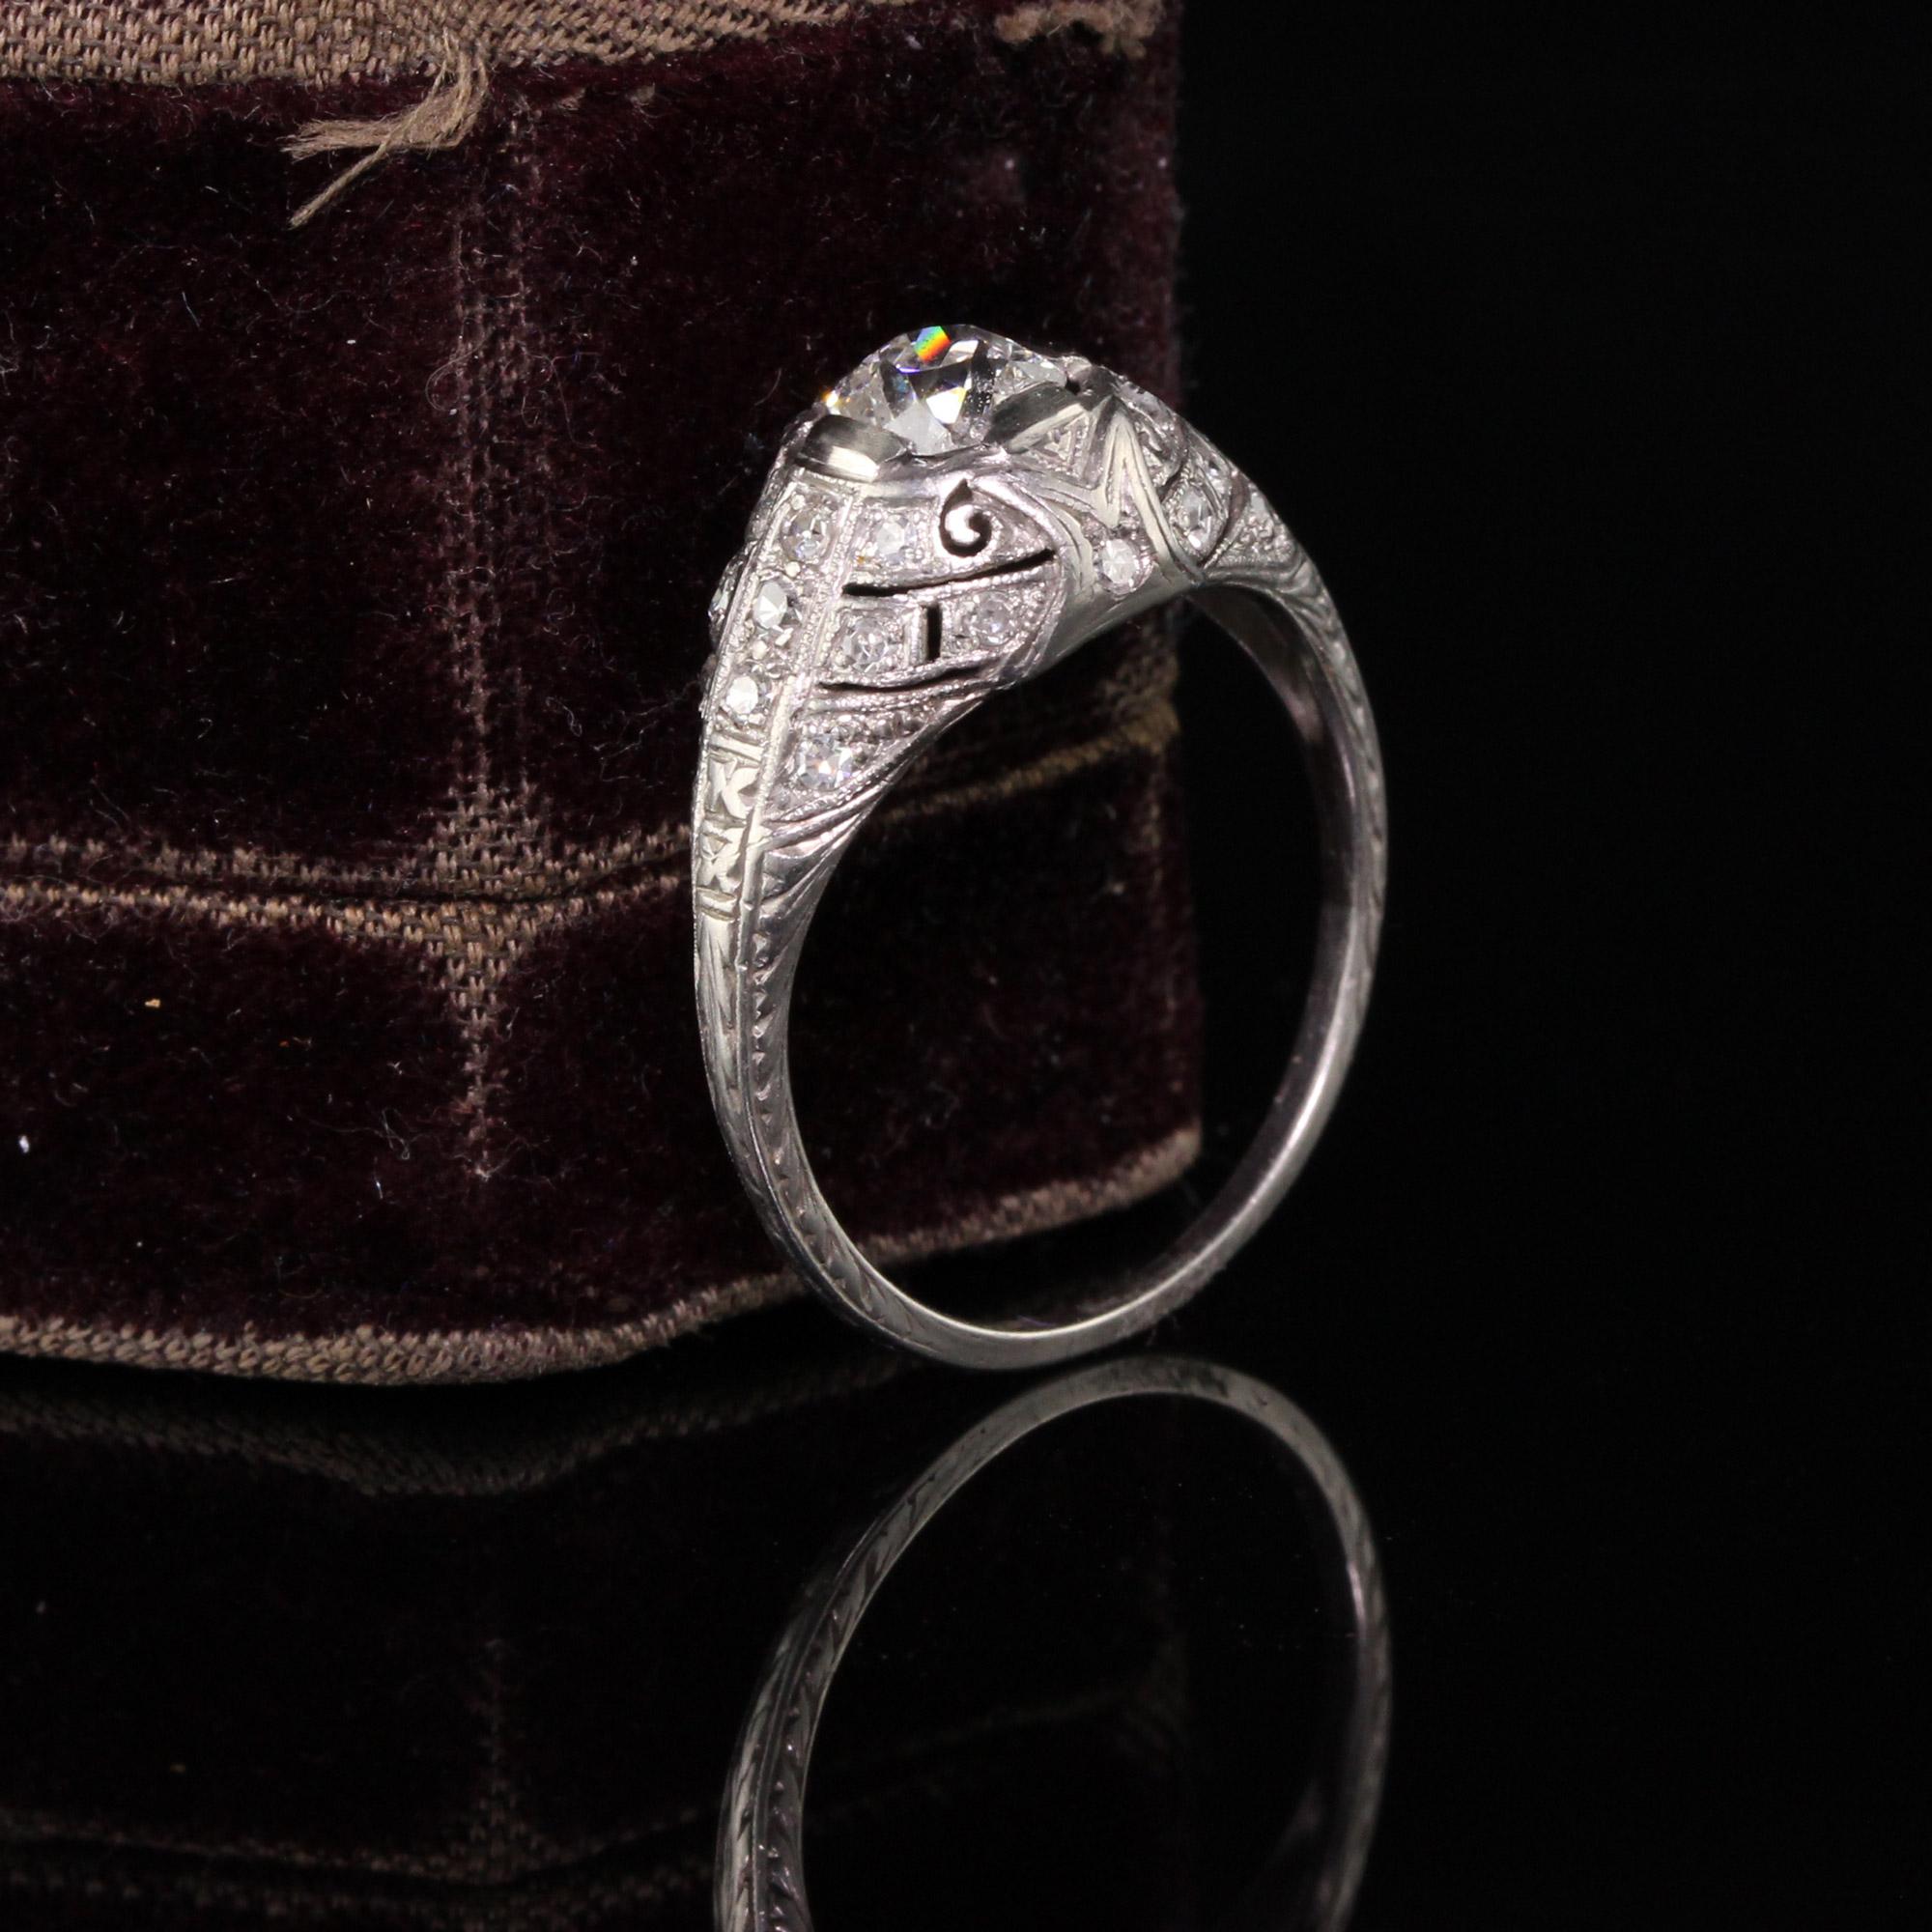 Beautiful Antique Art Deco Platinum Old Mine Diamond Engagement Ring. This beautiful engagement ring has an old mine cut diamond in the center of a beautiful platinum art deco mounting with incredible detail.

Item #R0724

Metal: Platinum

Center